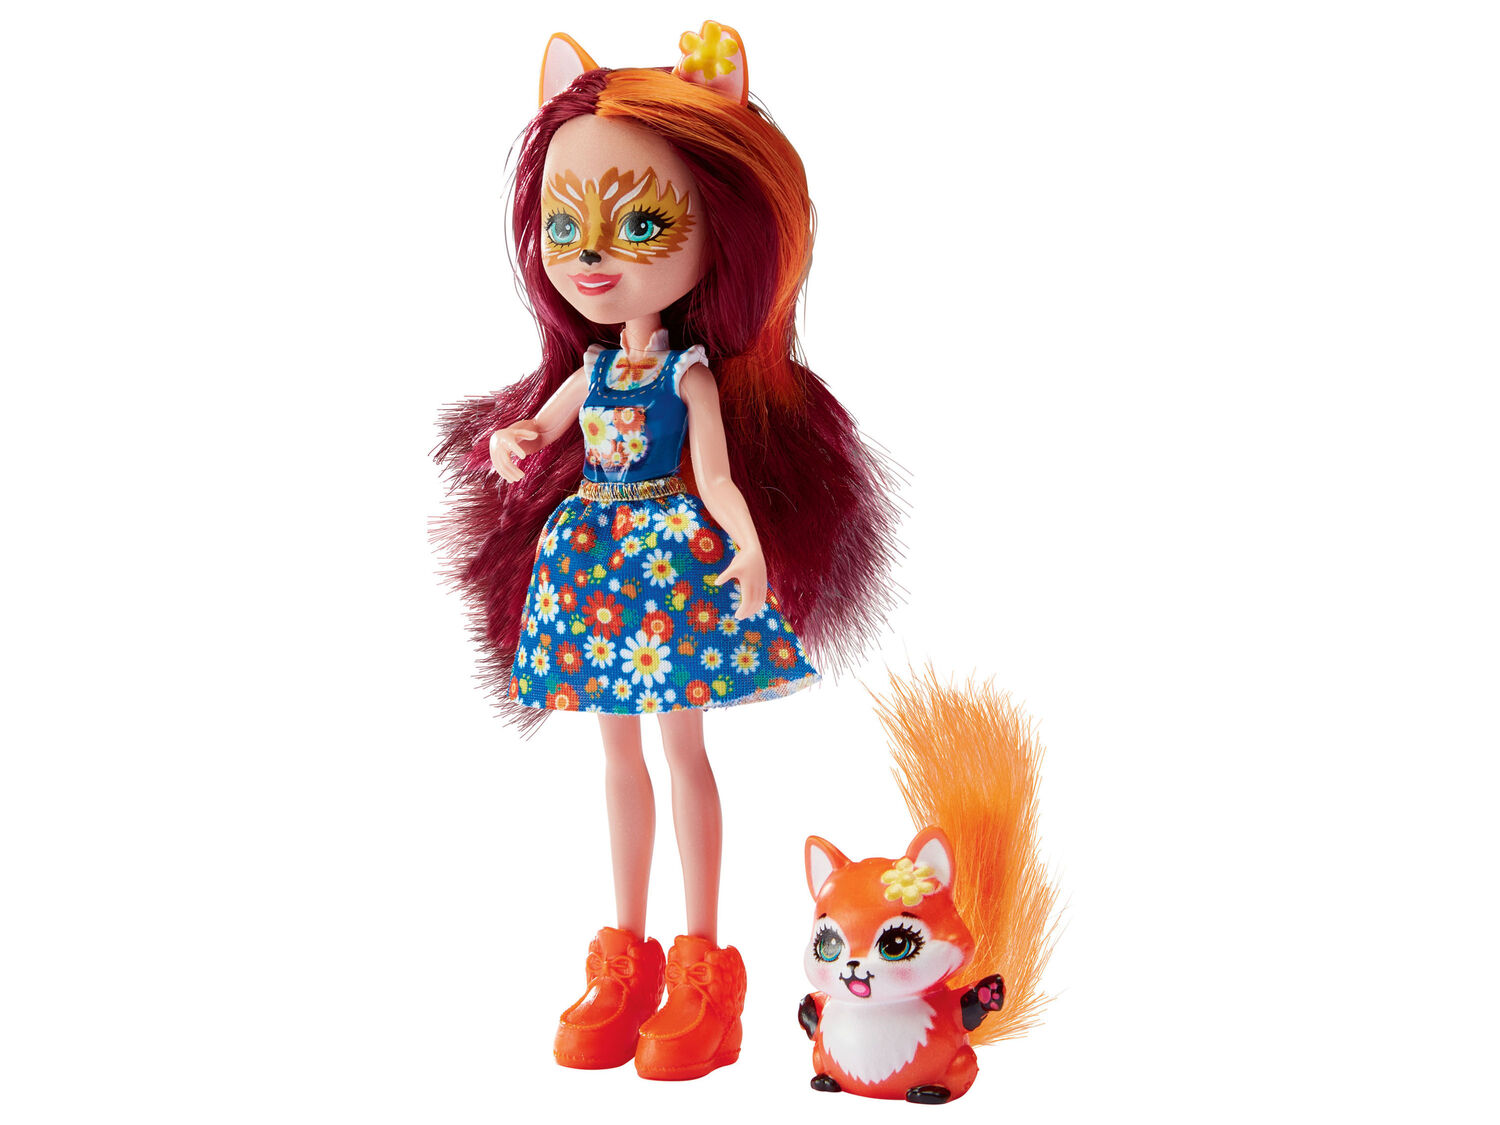 Bambola Enchantimals o Monster Truck Hot Wheels Mattel, prezzo 6.99 &#8364; ...